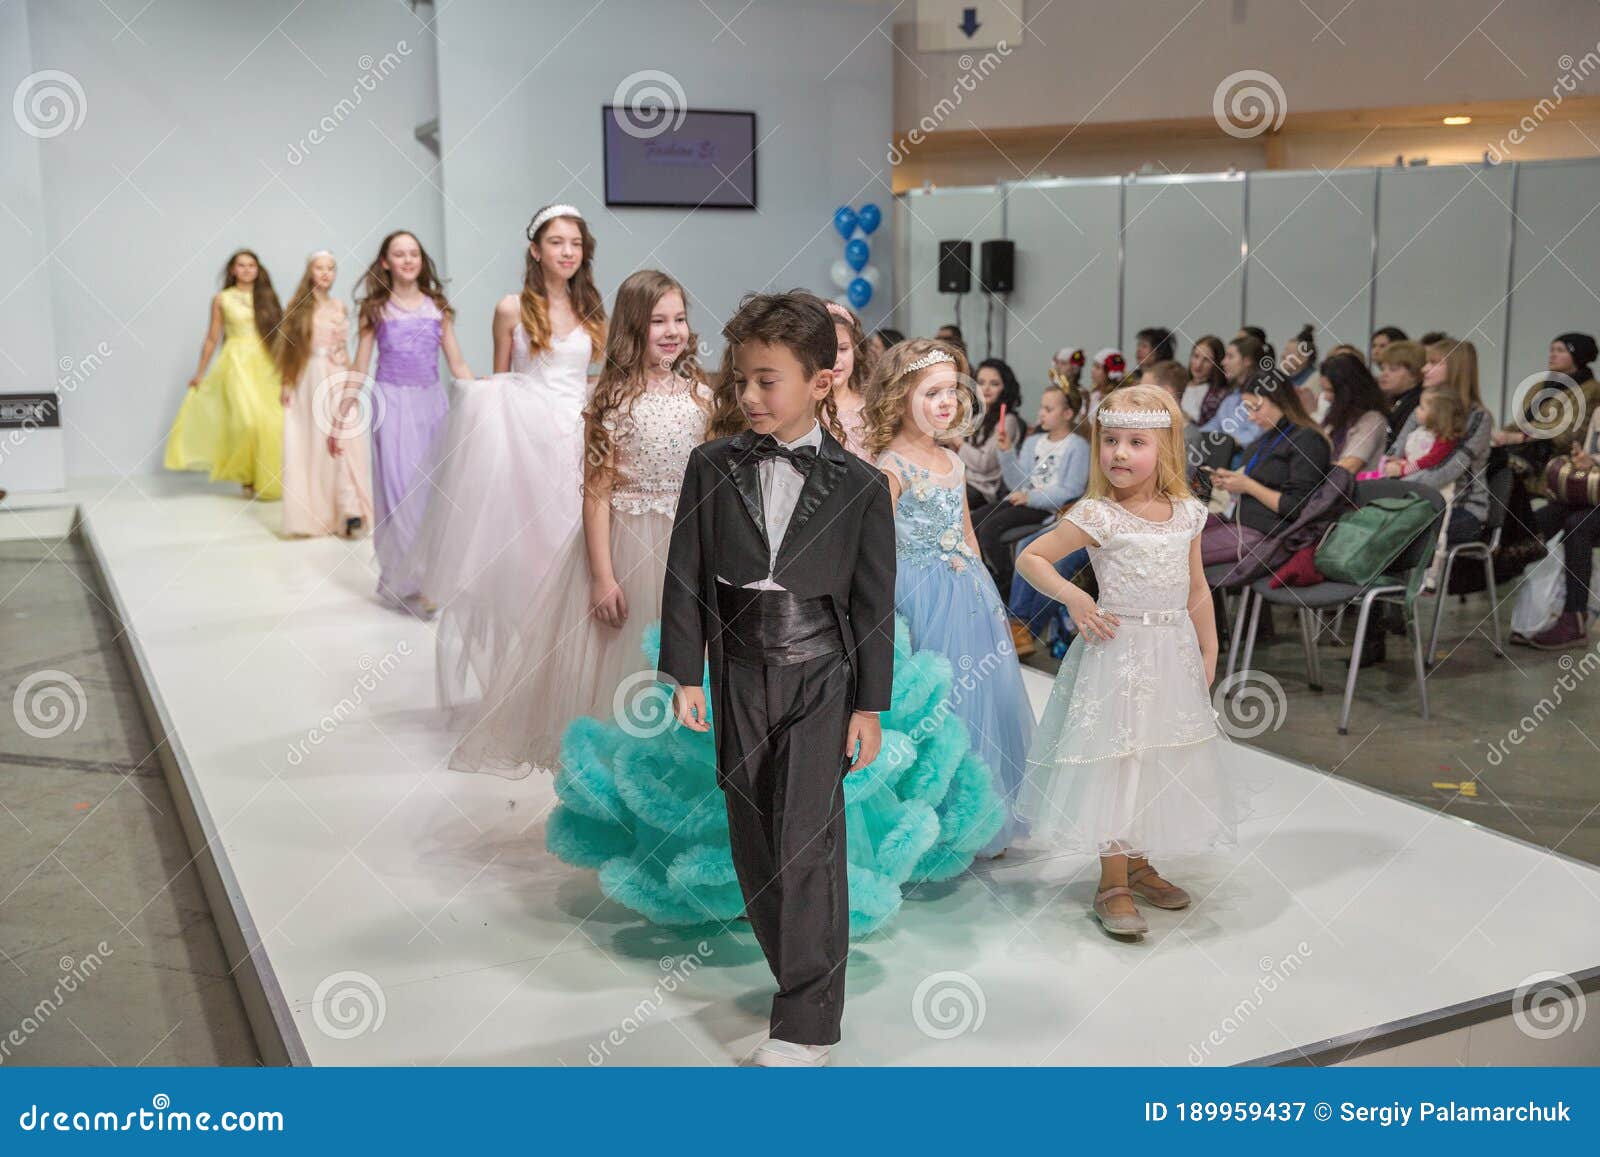 Desfile De Modas En Ucrania De Moda De Kiev 2018 editorial Imagen de manera, encanto: 189959437